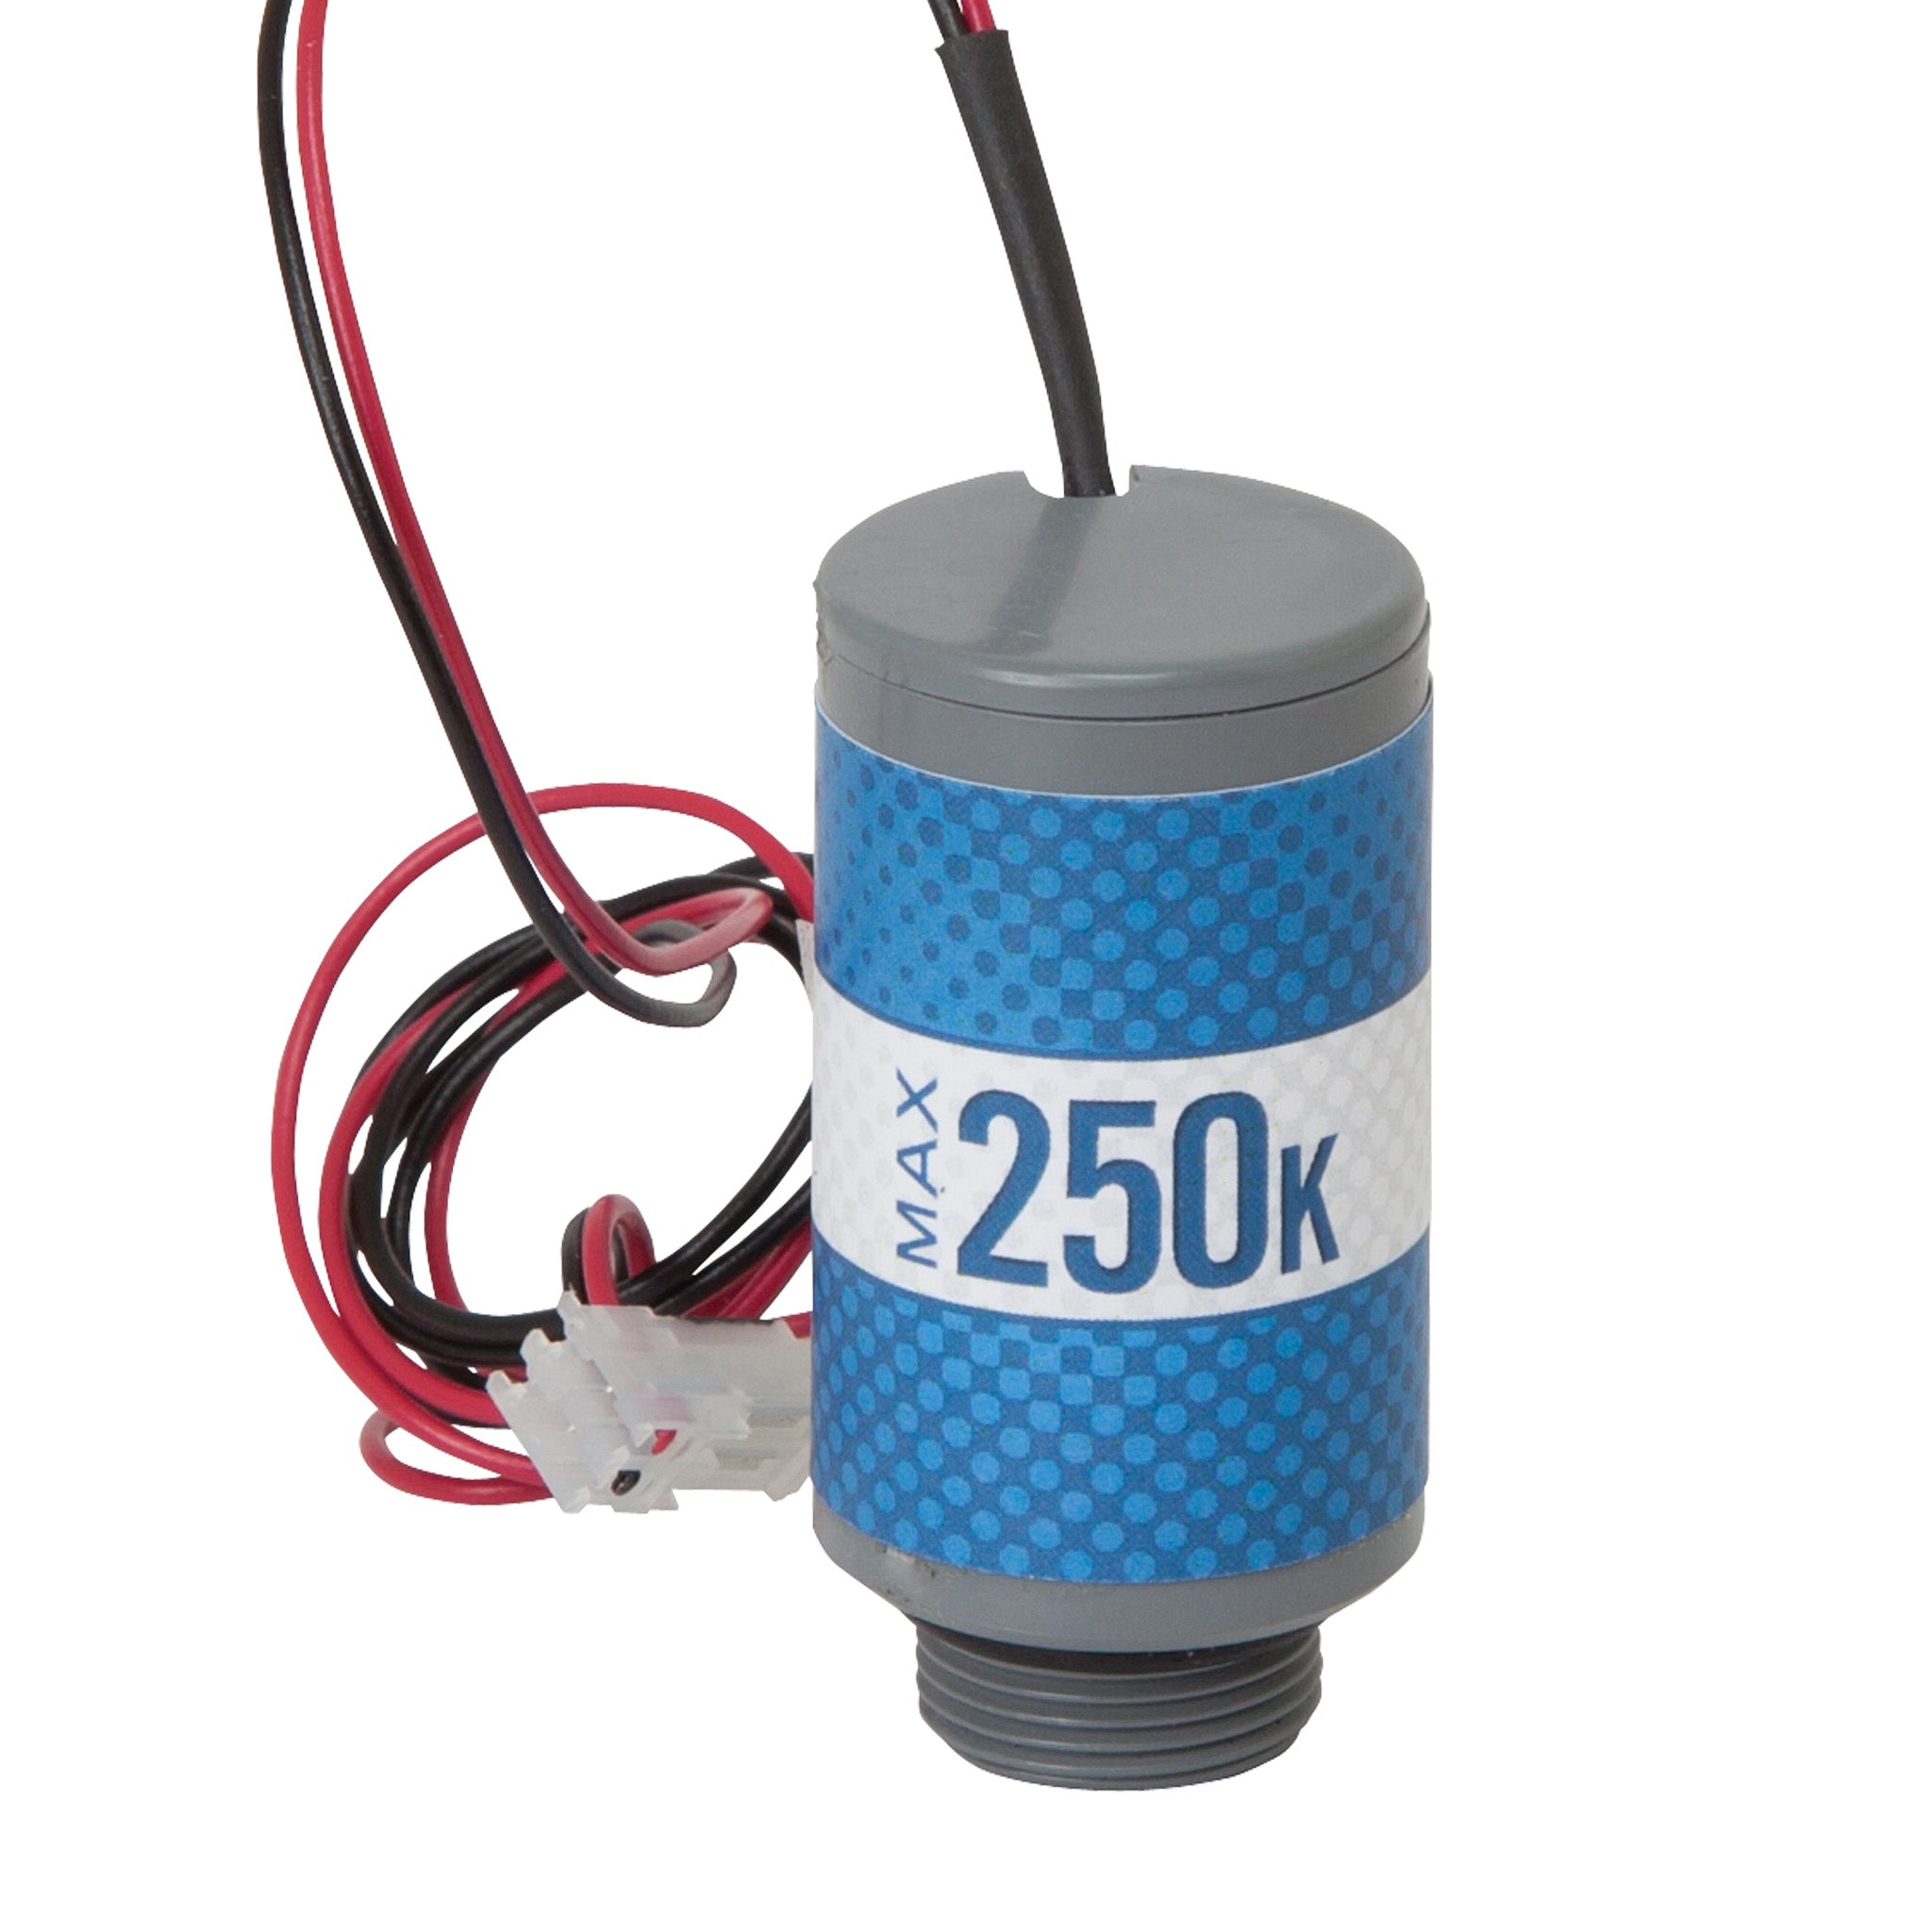 MAX-250K Oxygen Sensor with Panduit